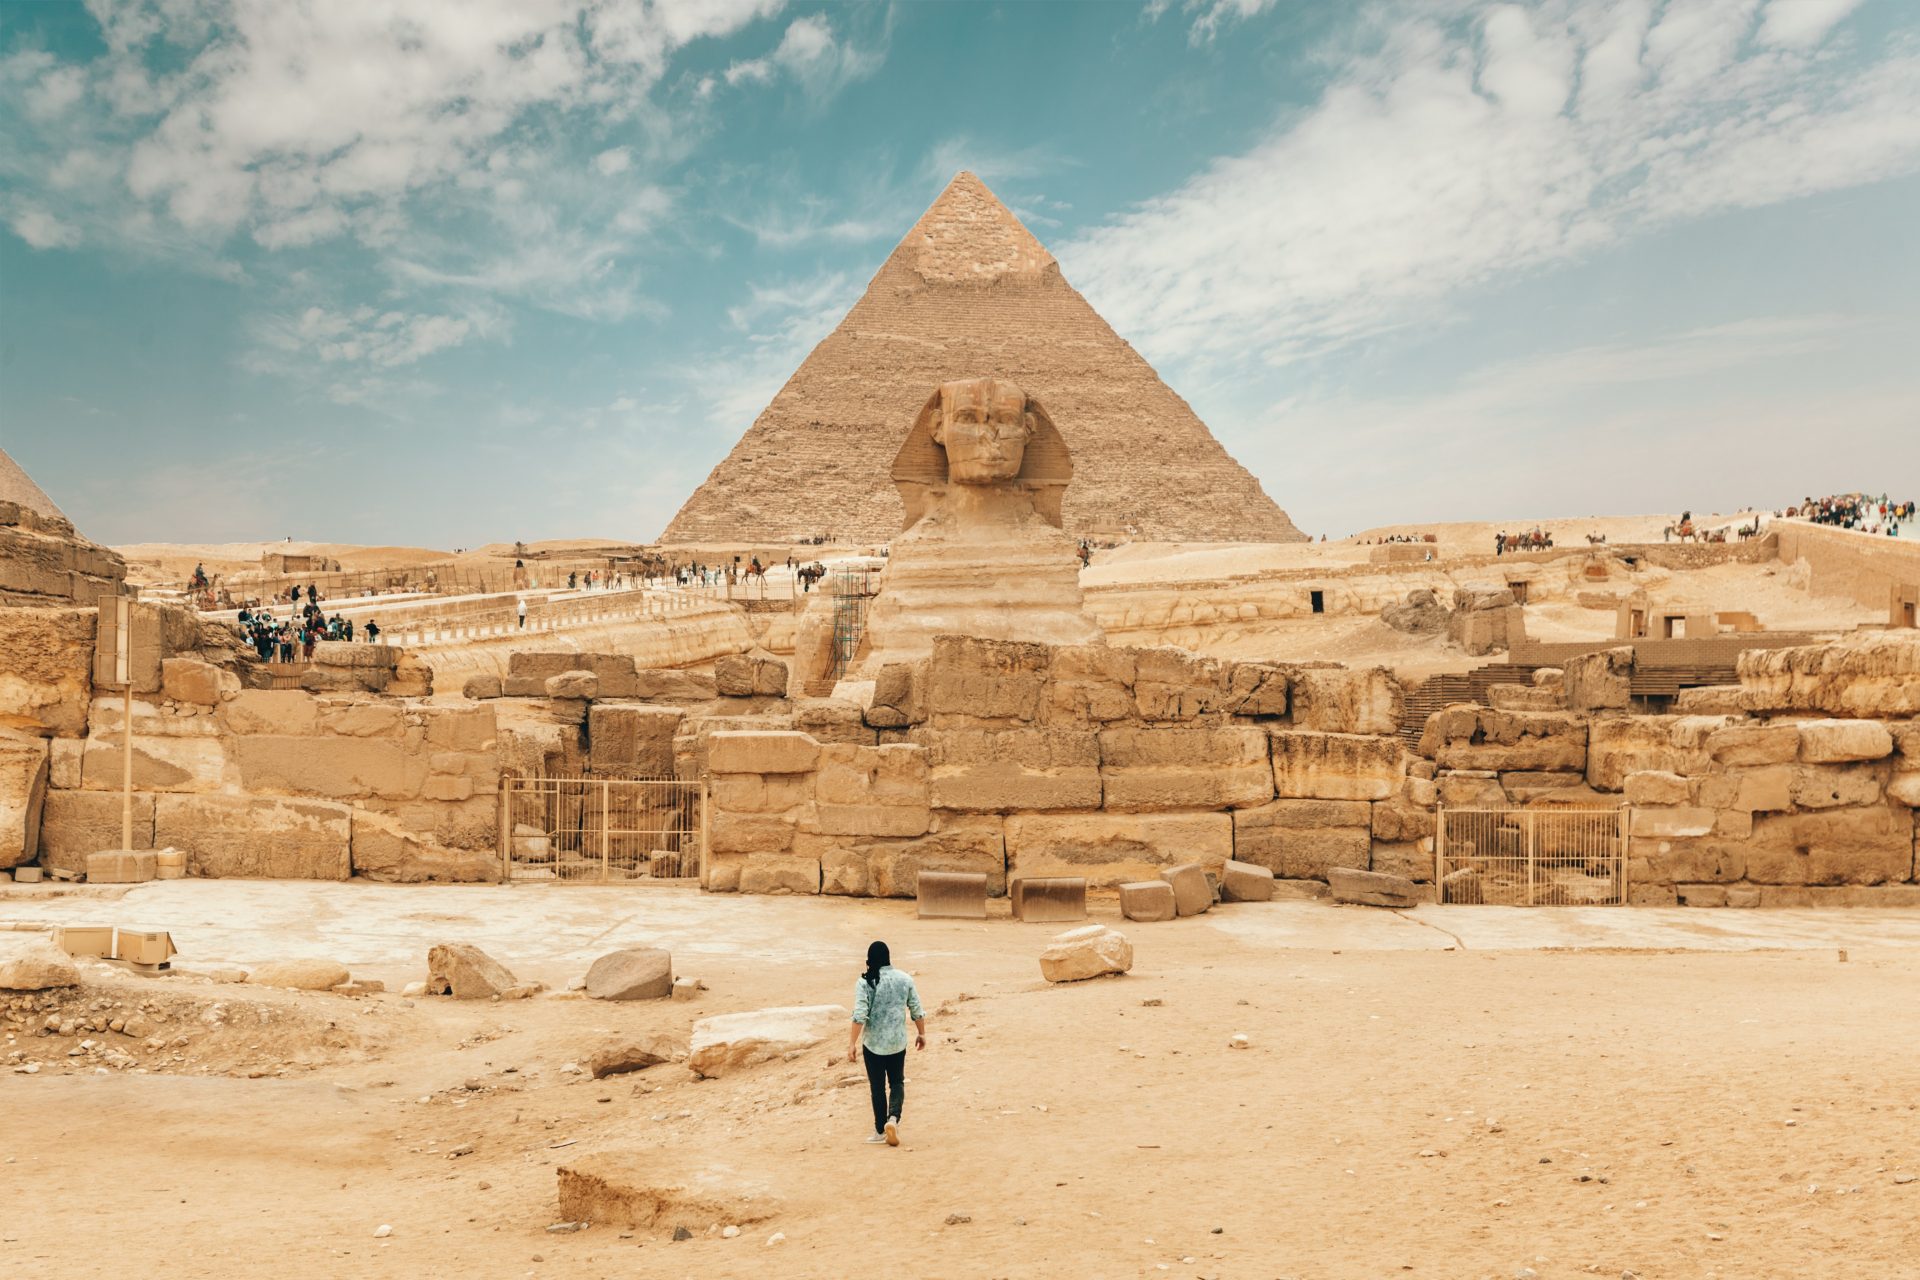 11 jours en Egypte : pyramides